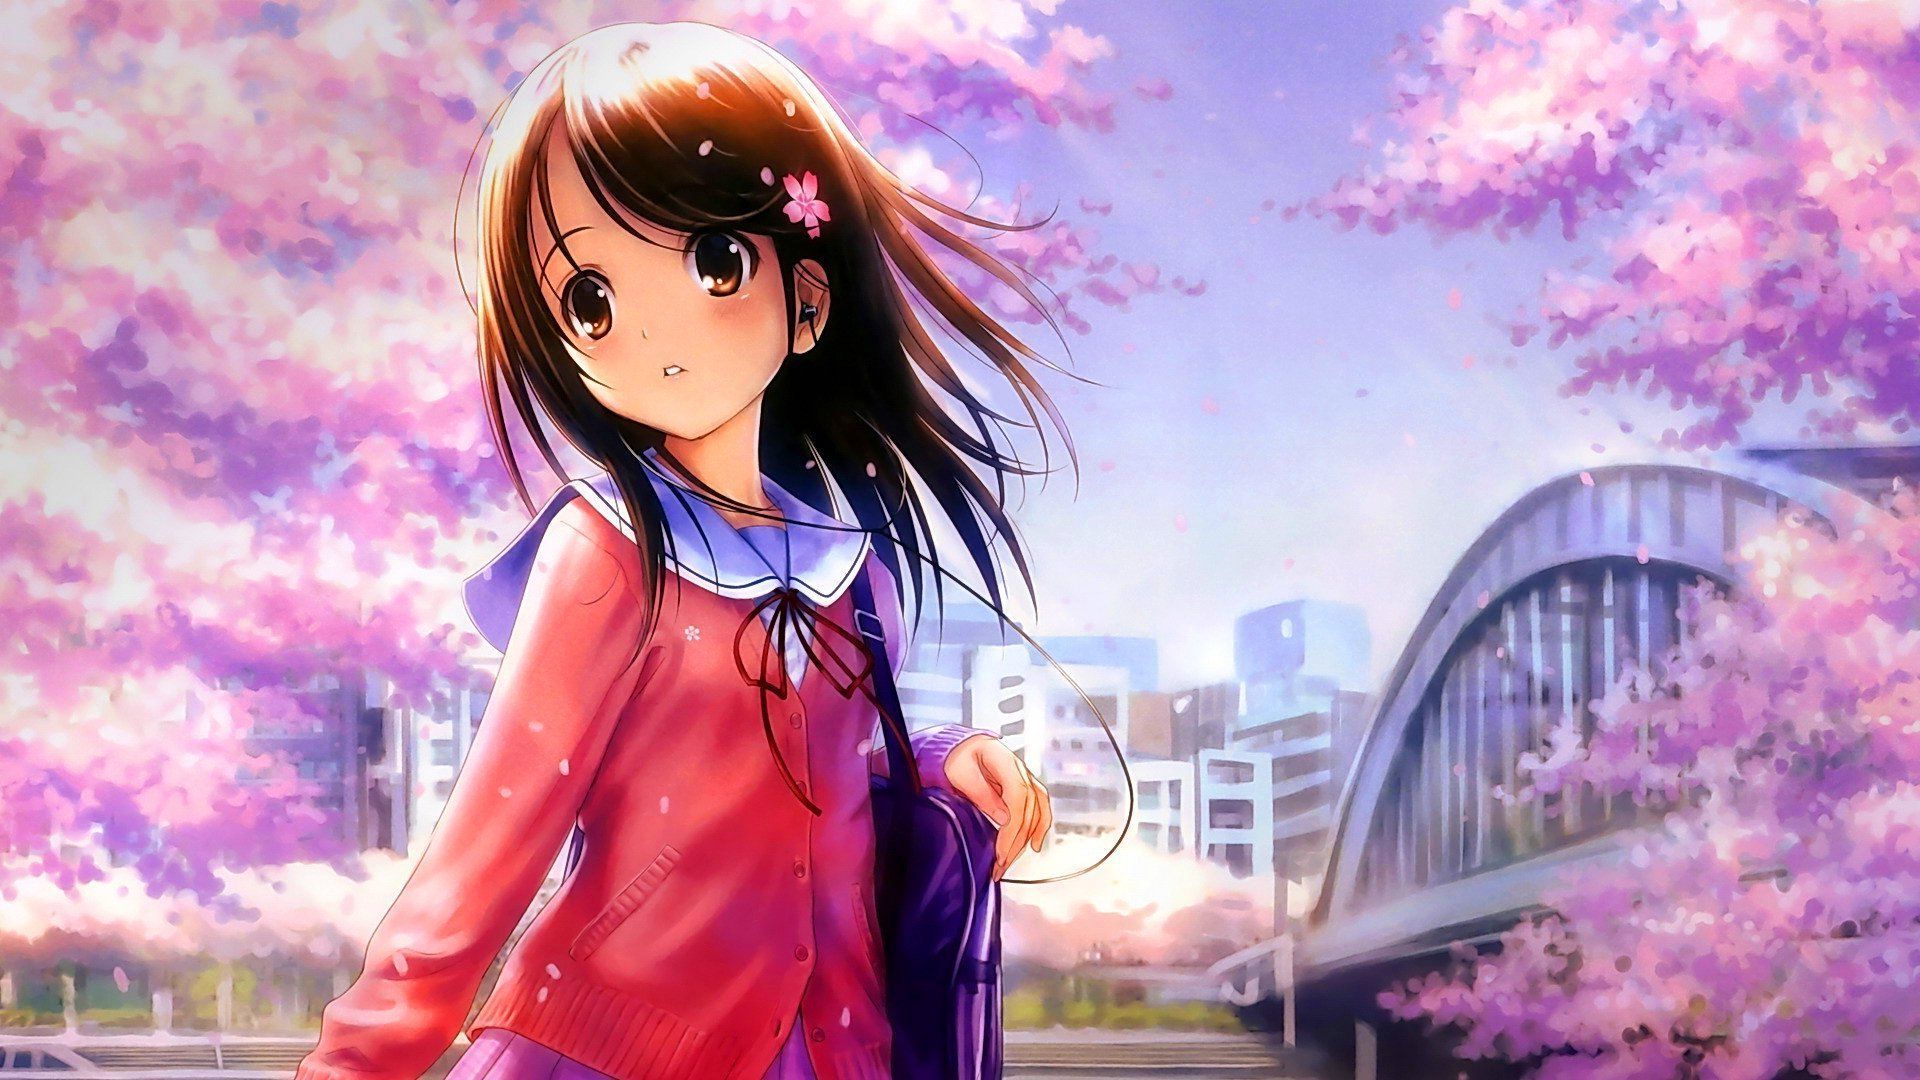 Cute Anime Girl Wallpaper 1920x1080